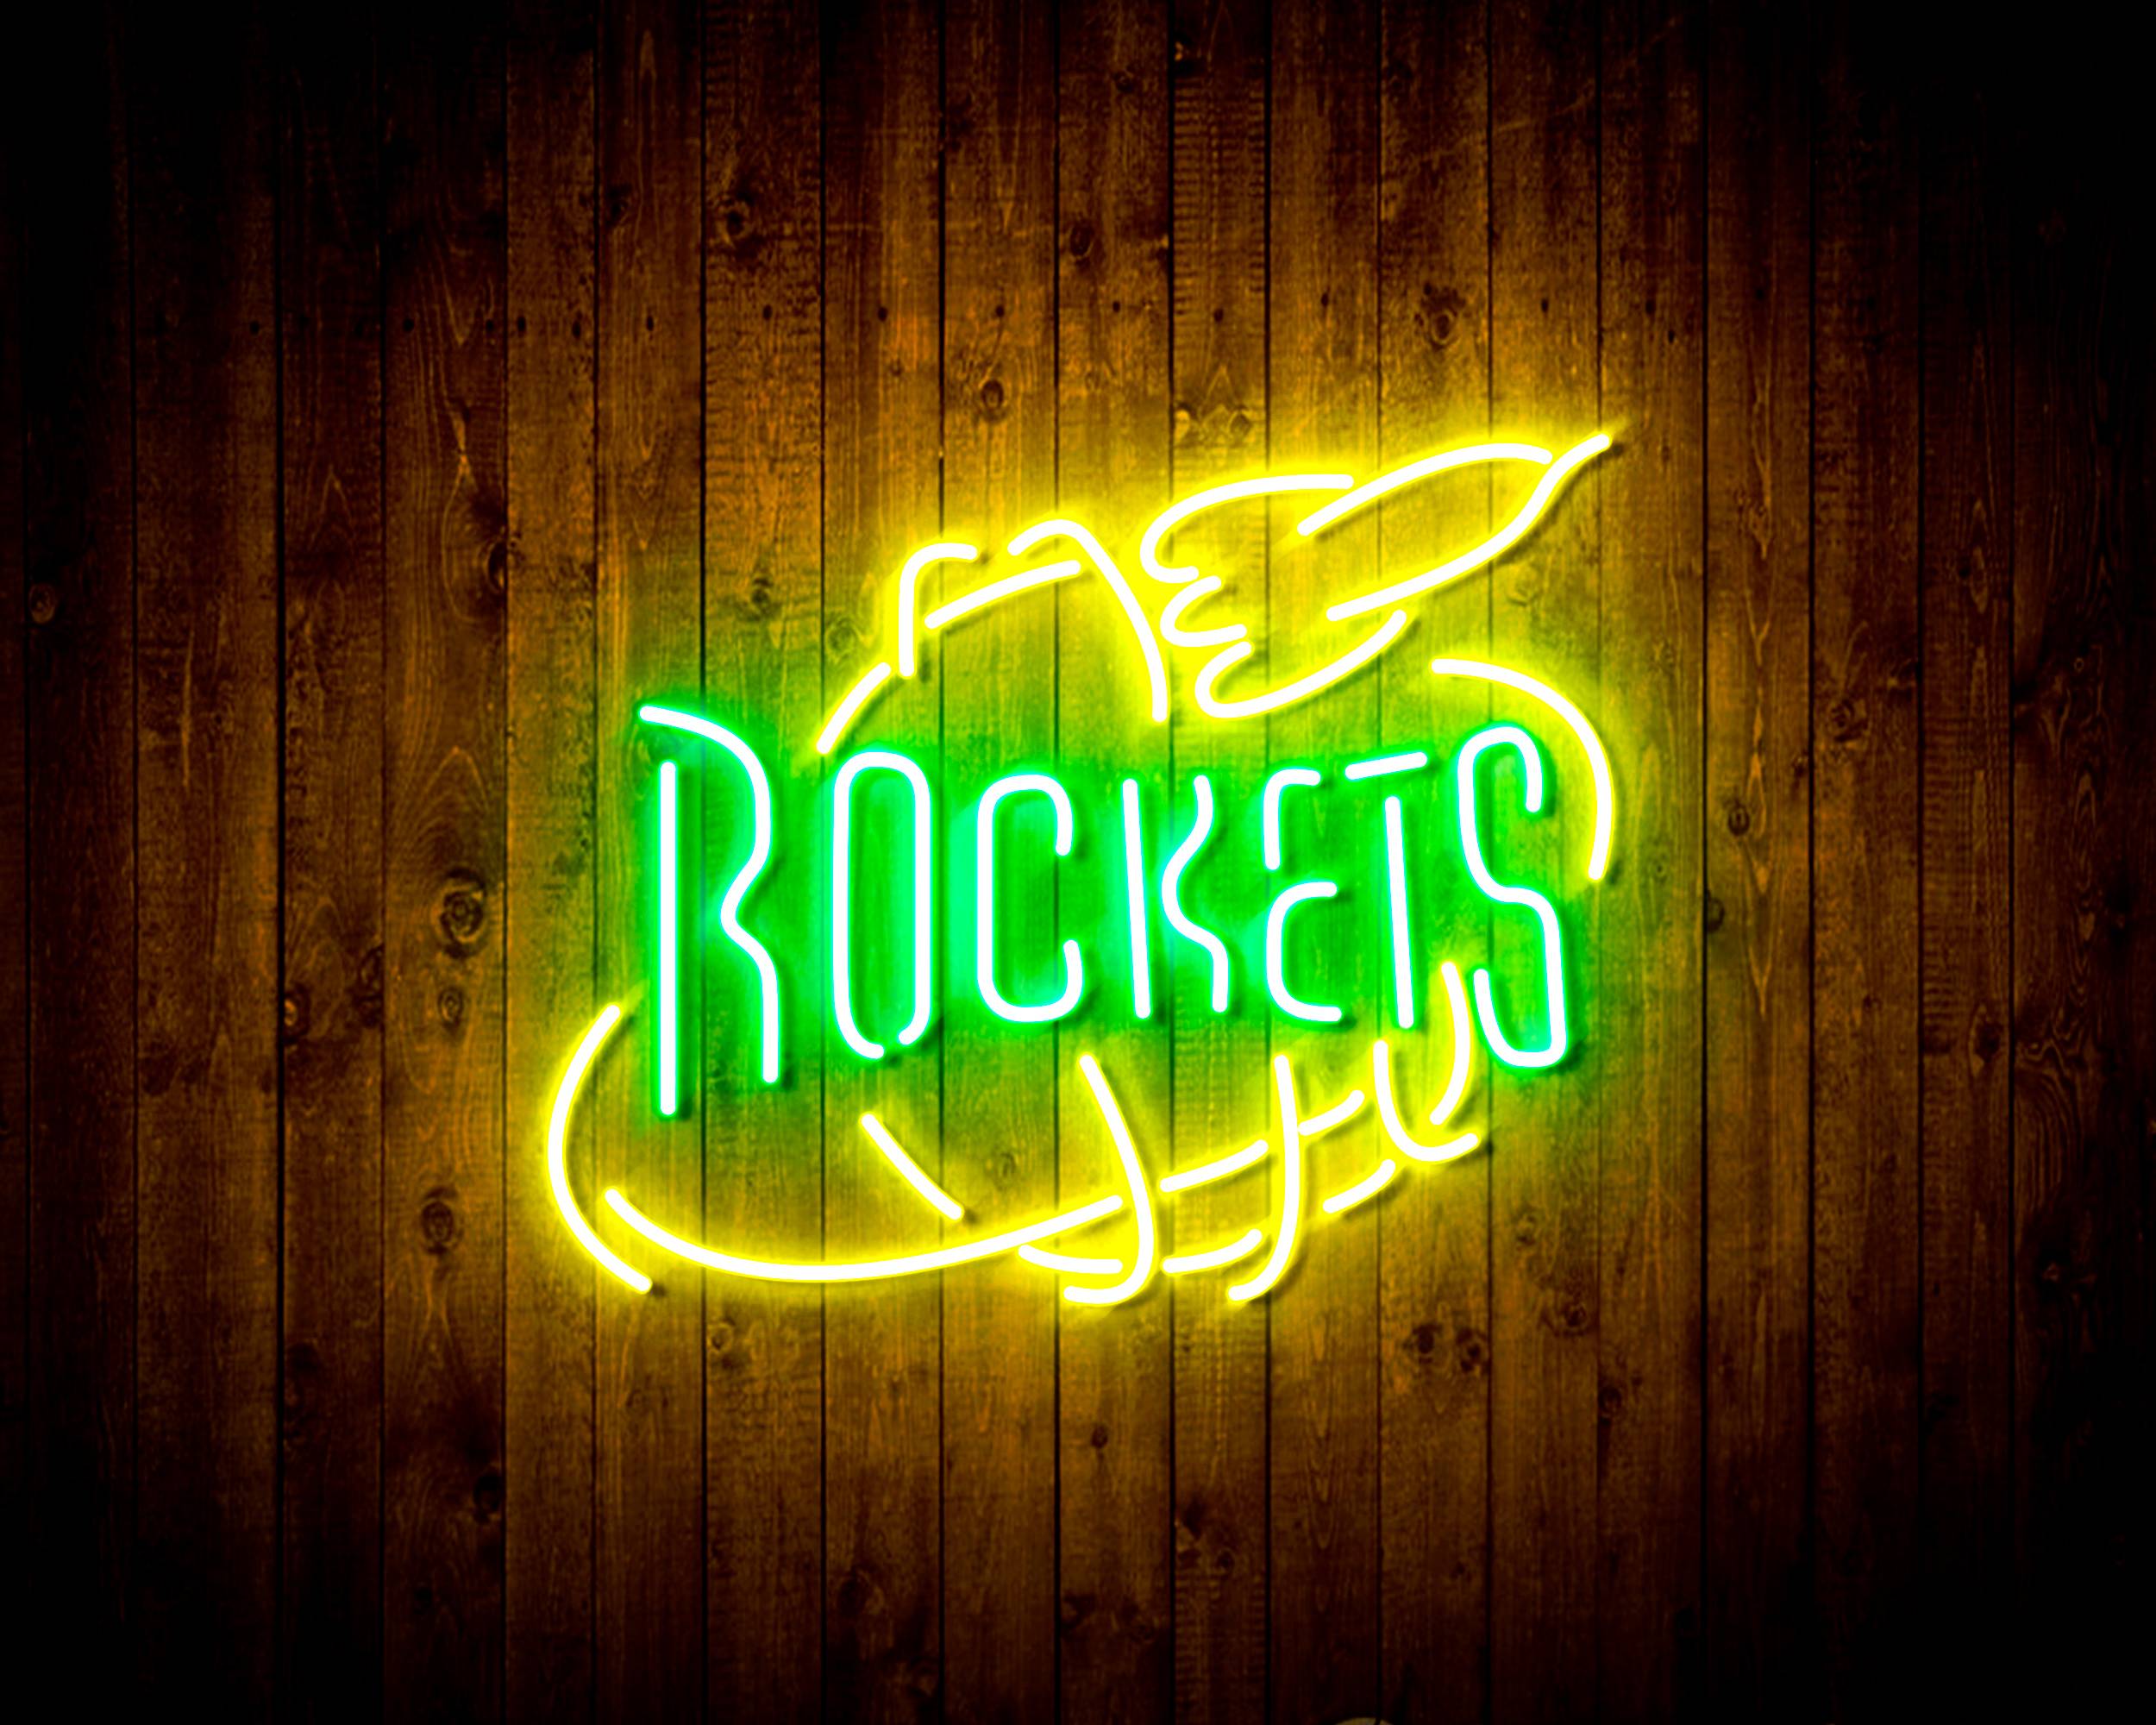 NBA Houston Rockets Handmade LED Neon Light Sign